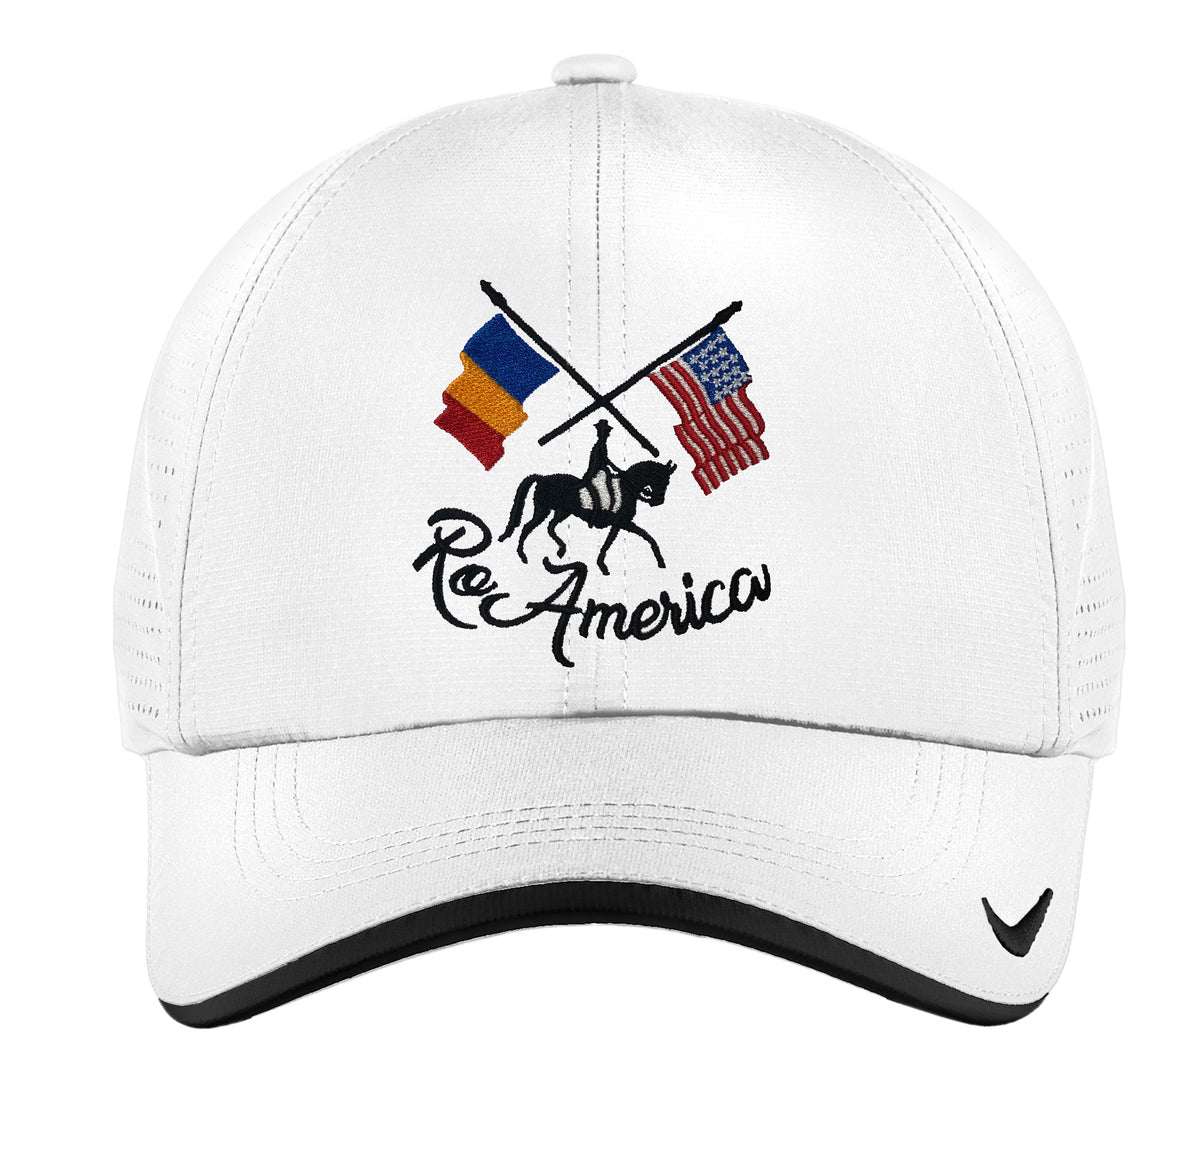 Ro America embroidered Nike cap